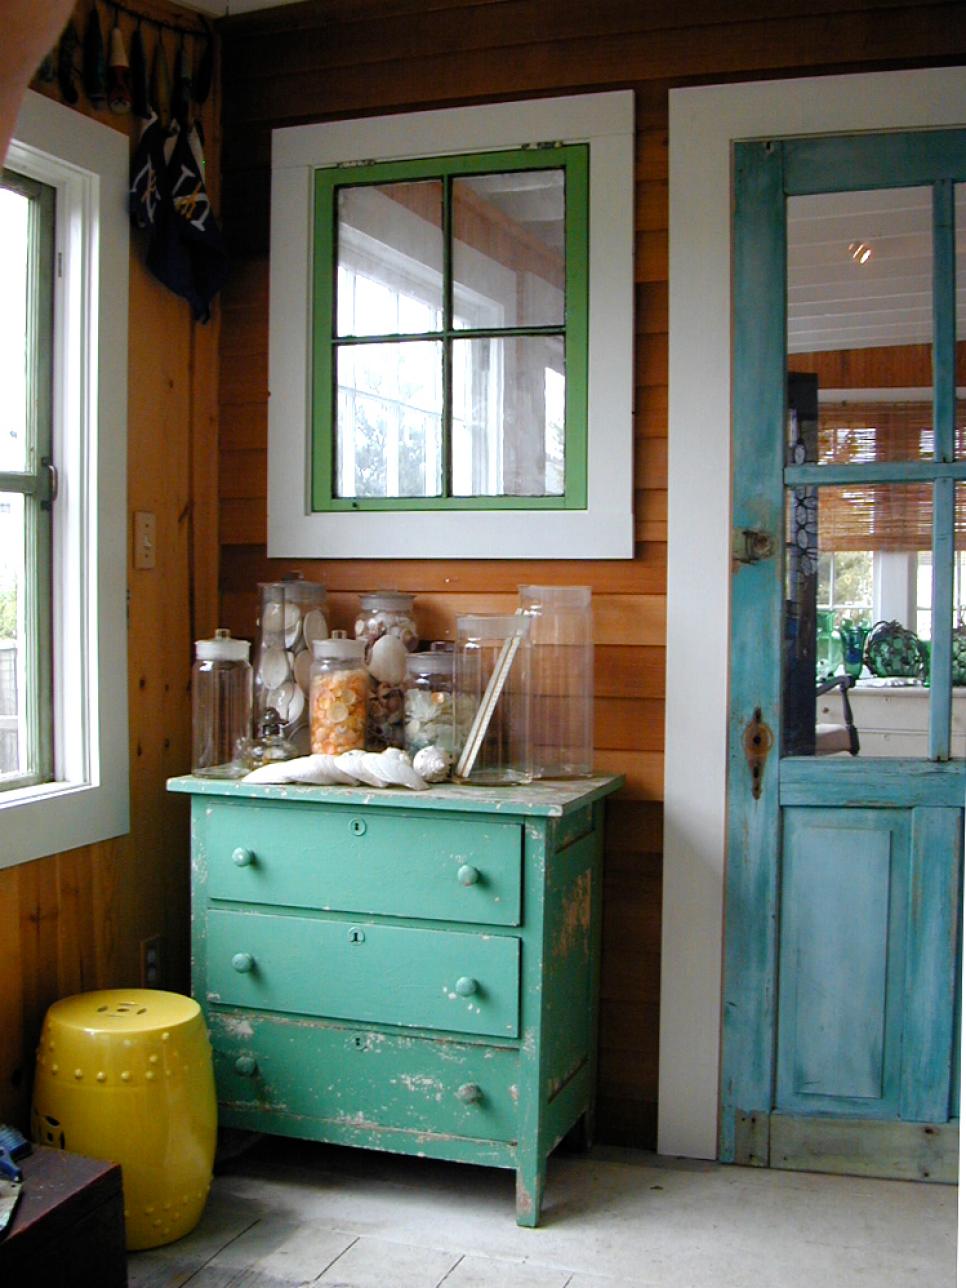 interior rustic cu mobilier de lemn vechi colorat usa albastra dulap verde